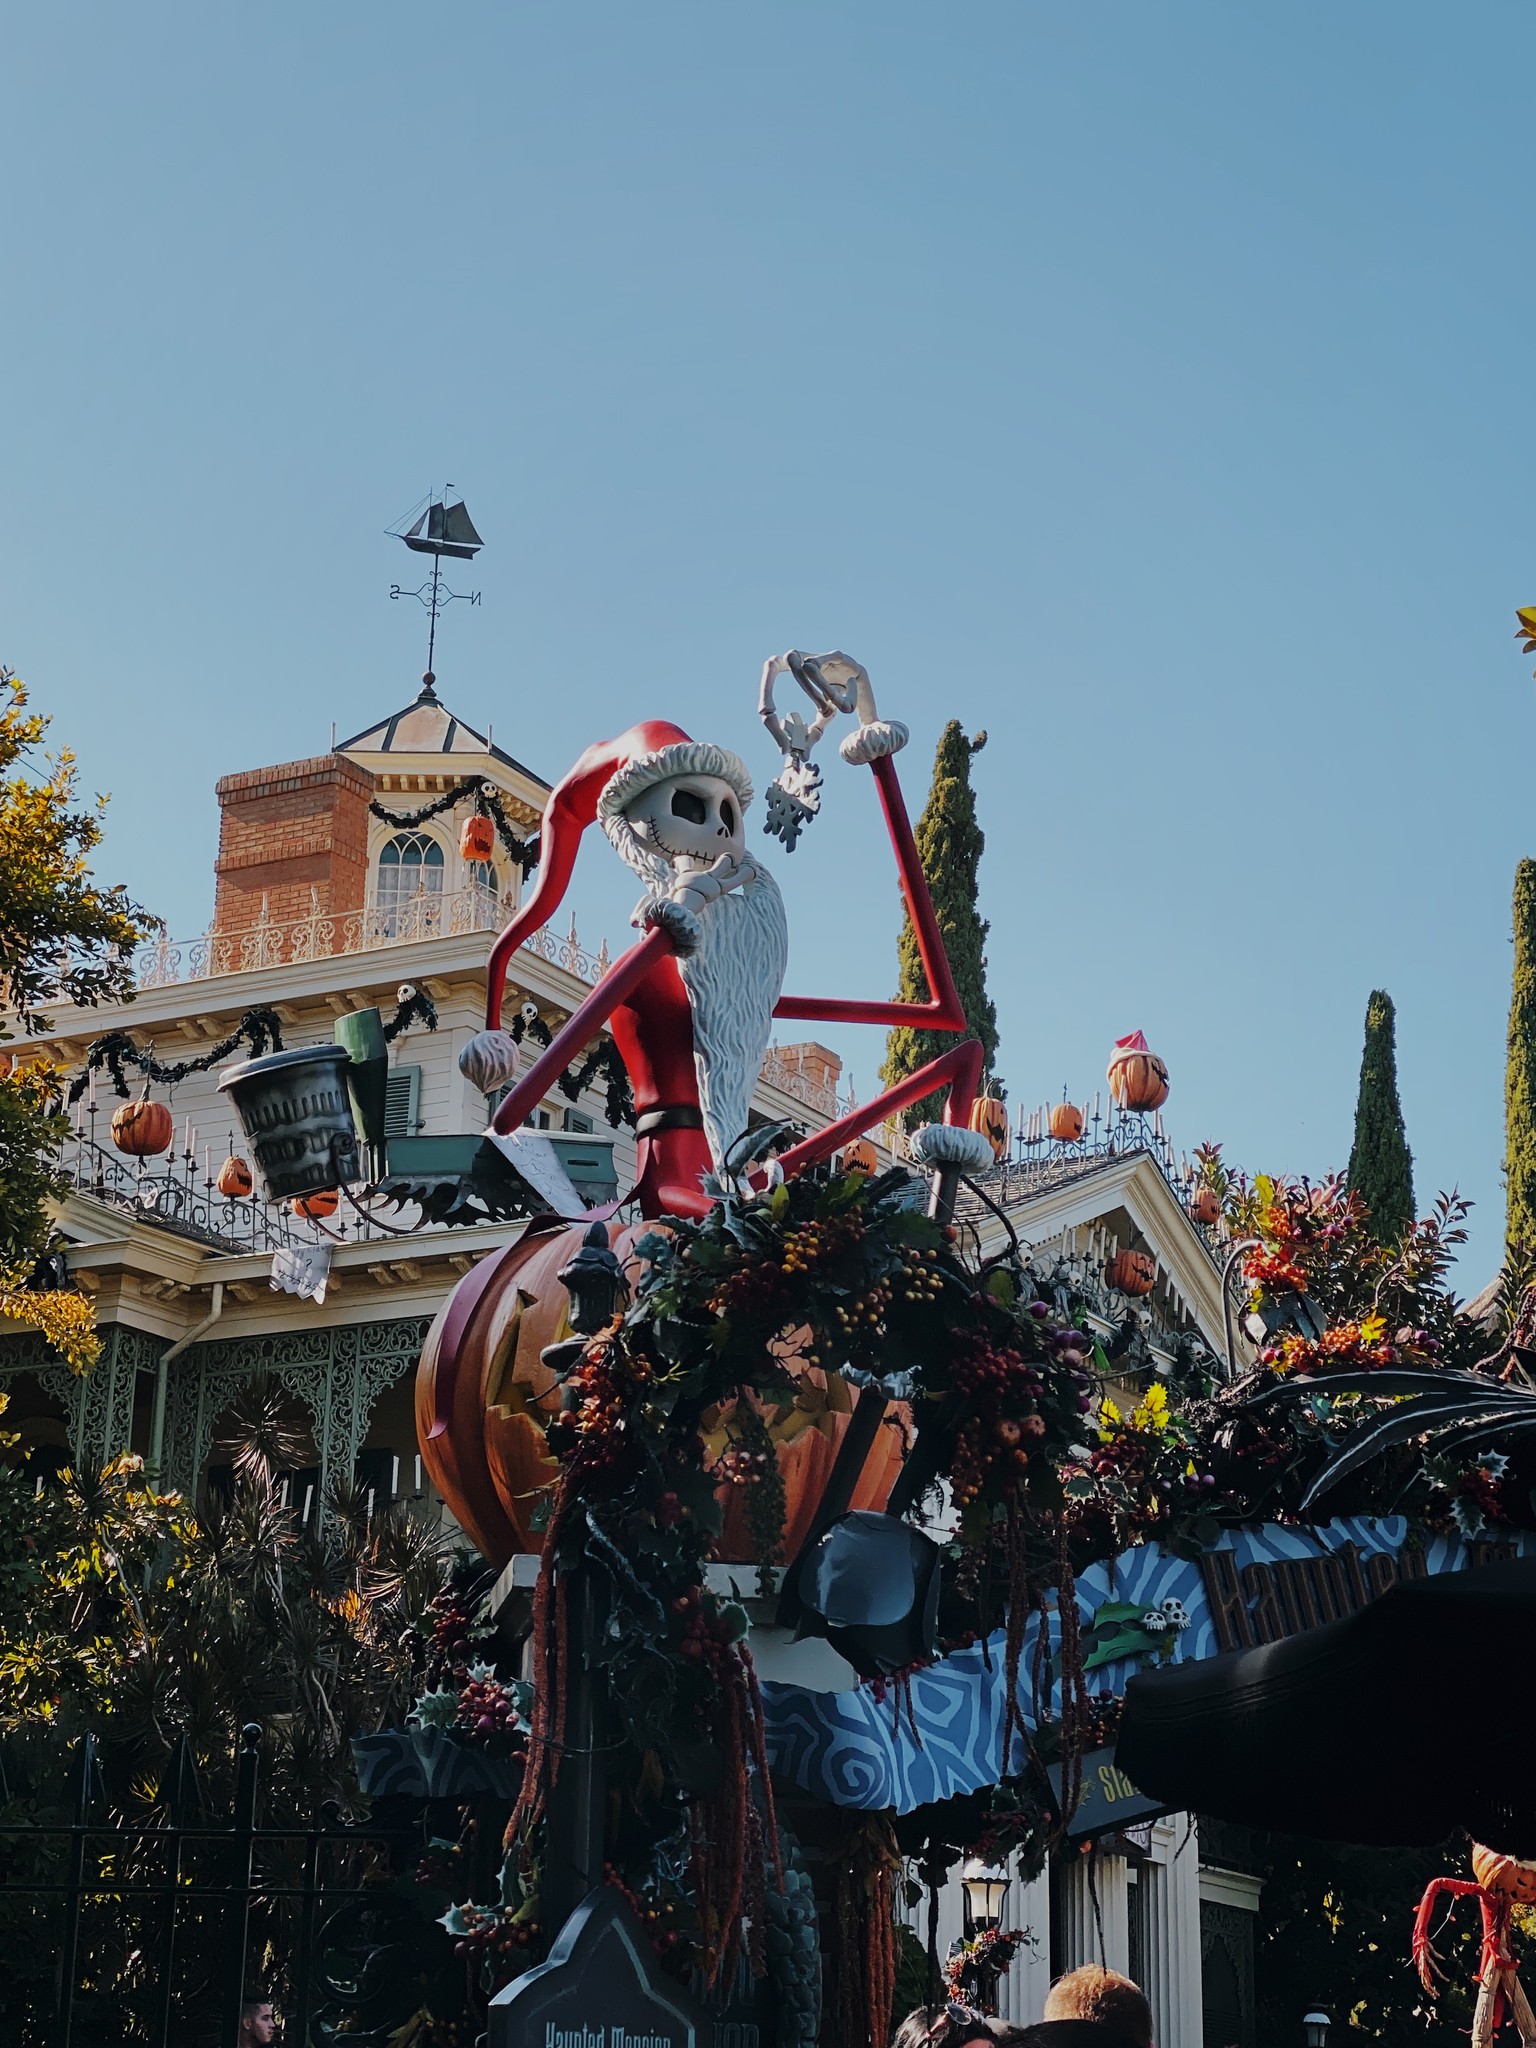 Jack Skellington Haunted Mansion Holiday at Disneyland